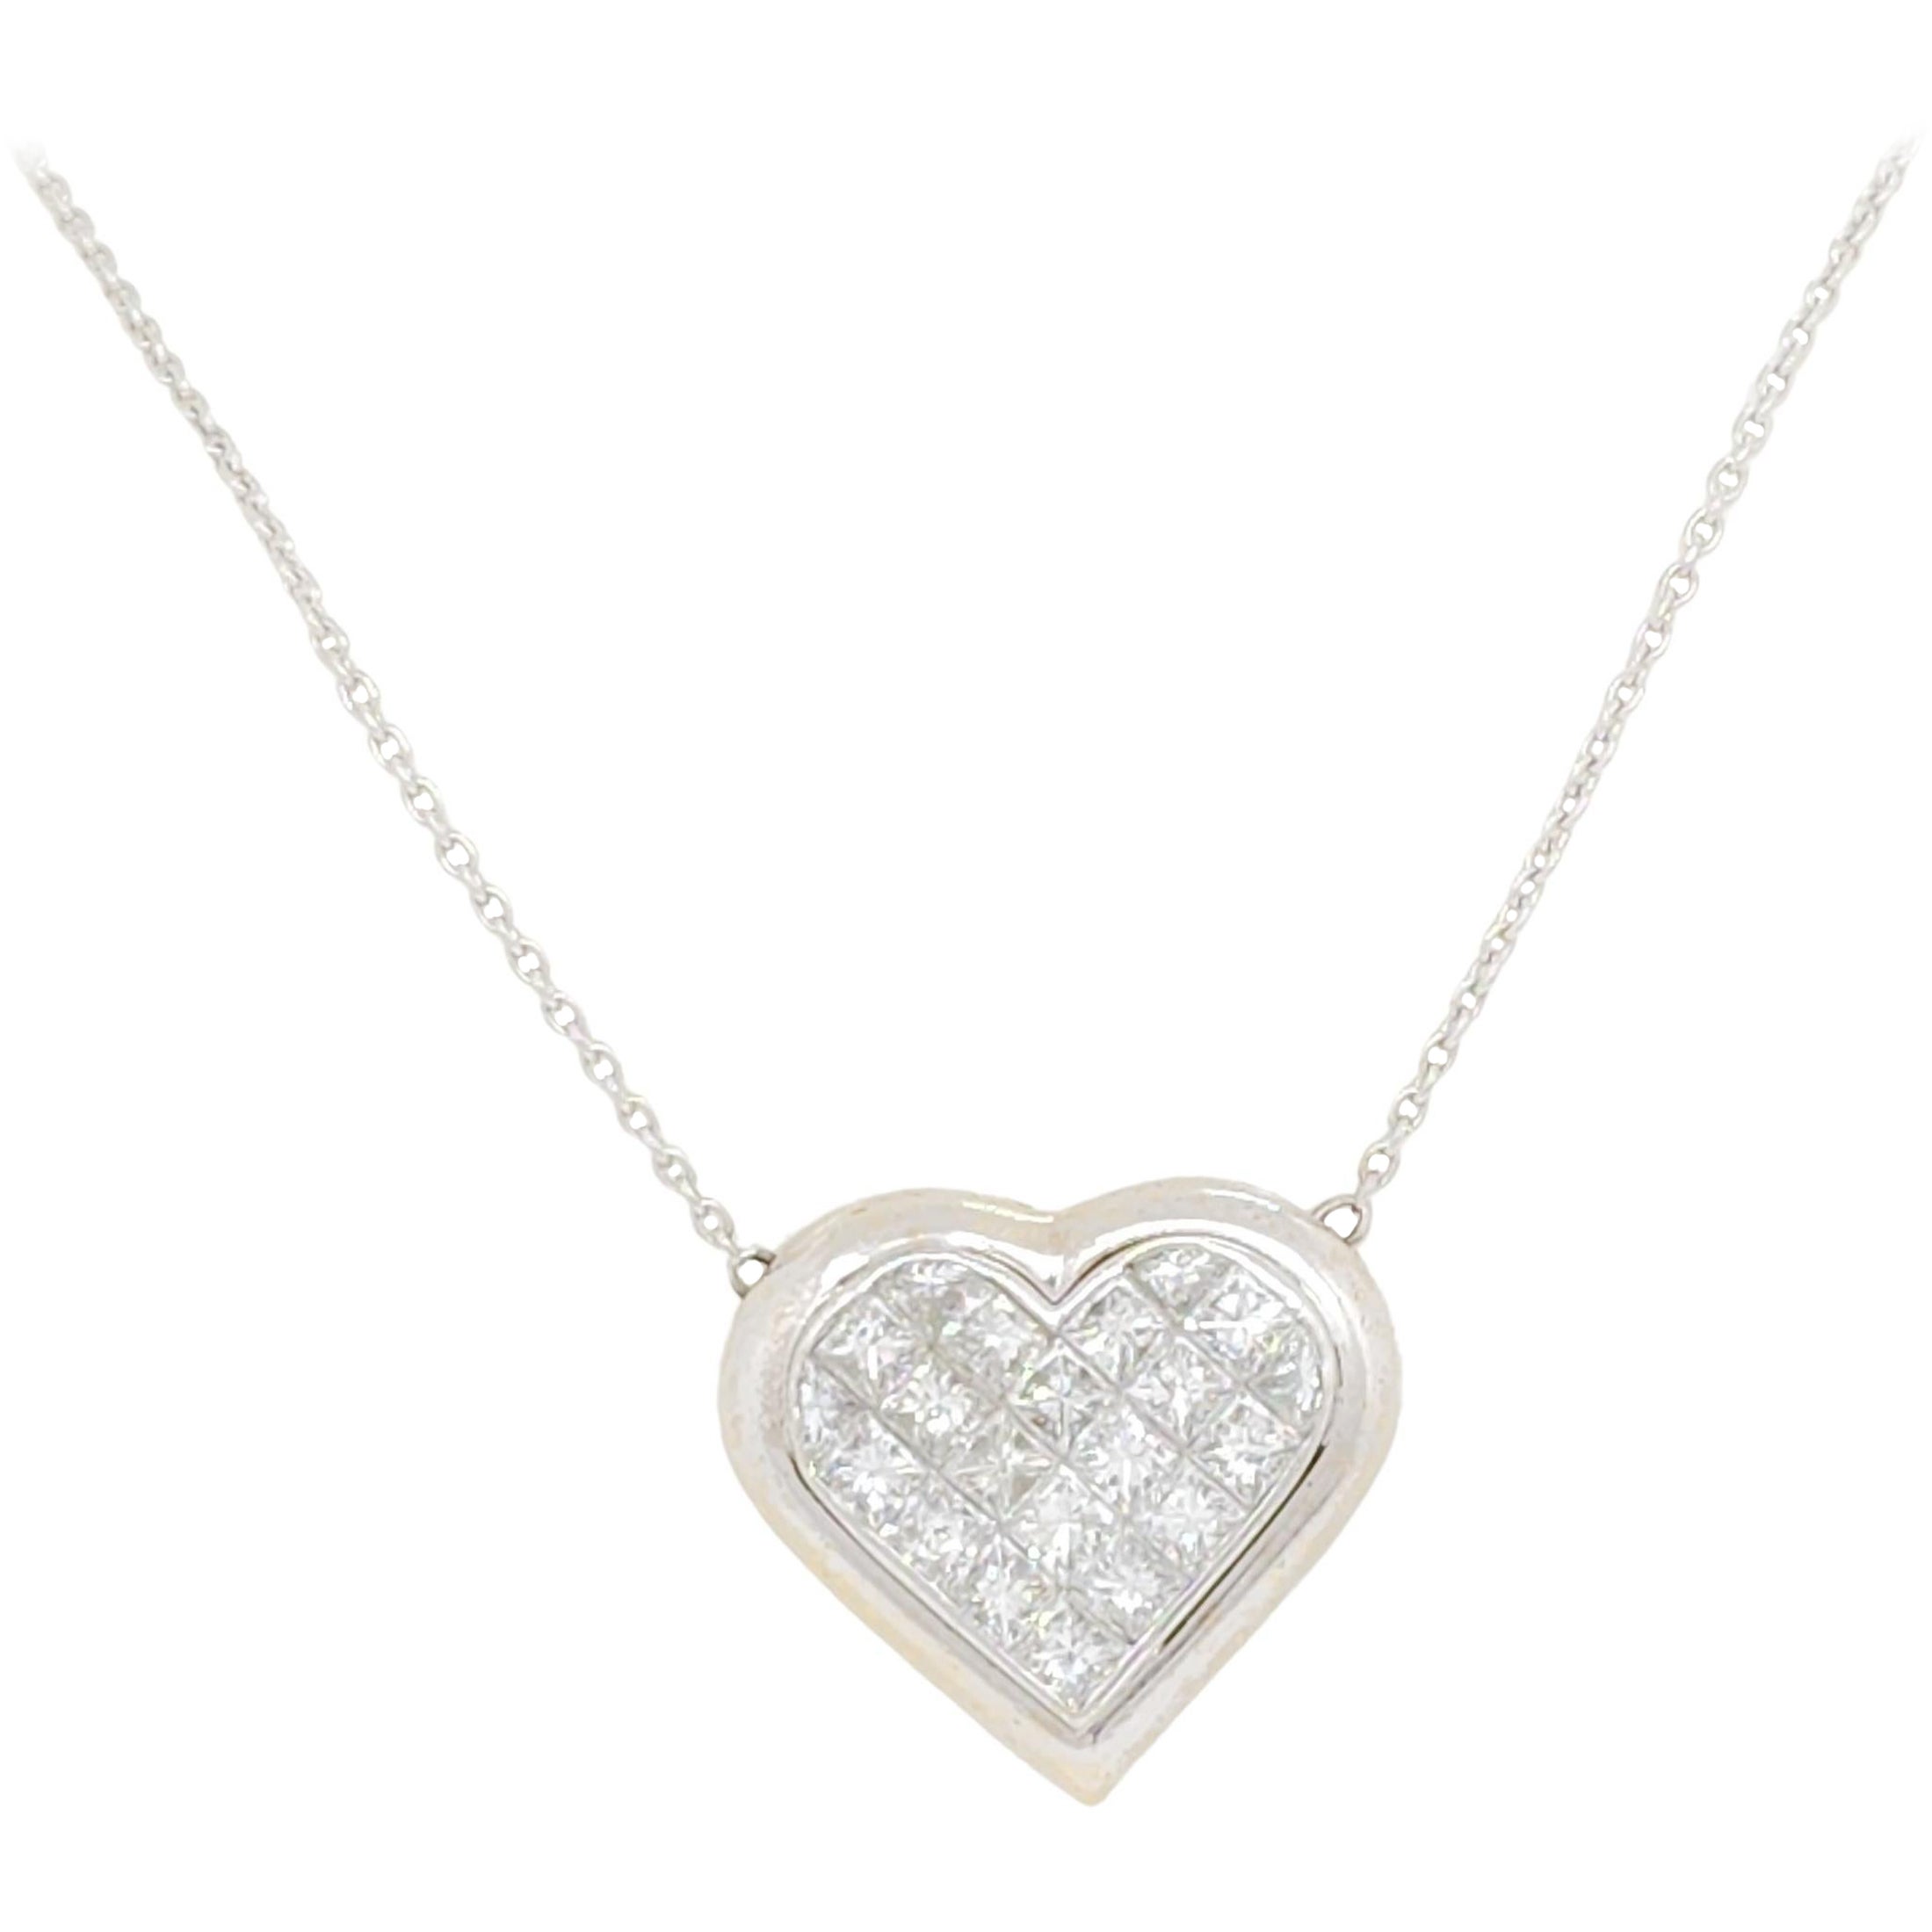 White Diamond Princess Cut Heart Pendant Necklace in 18k